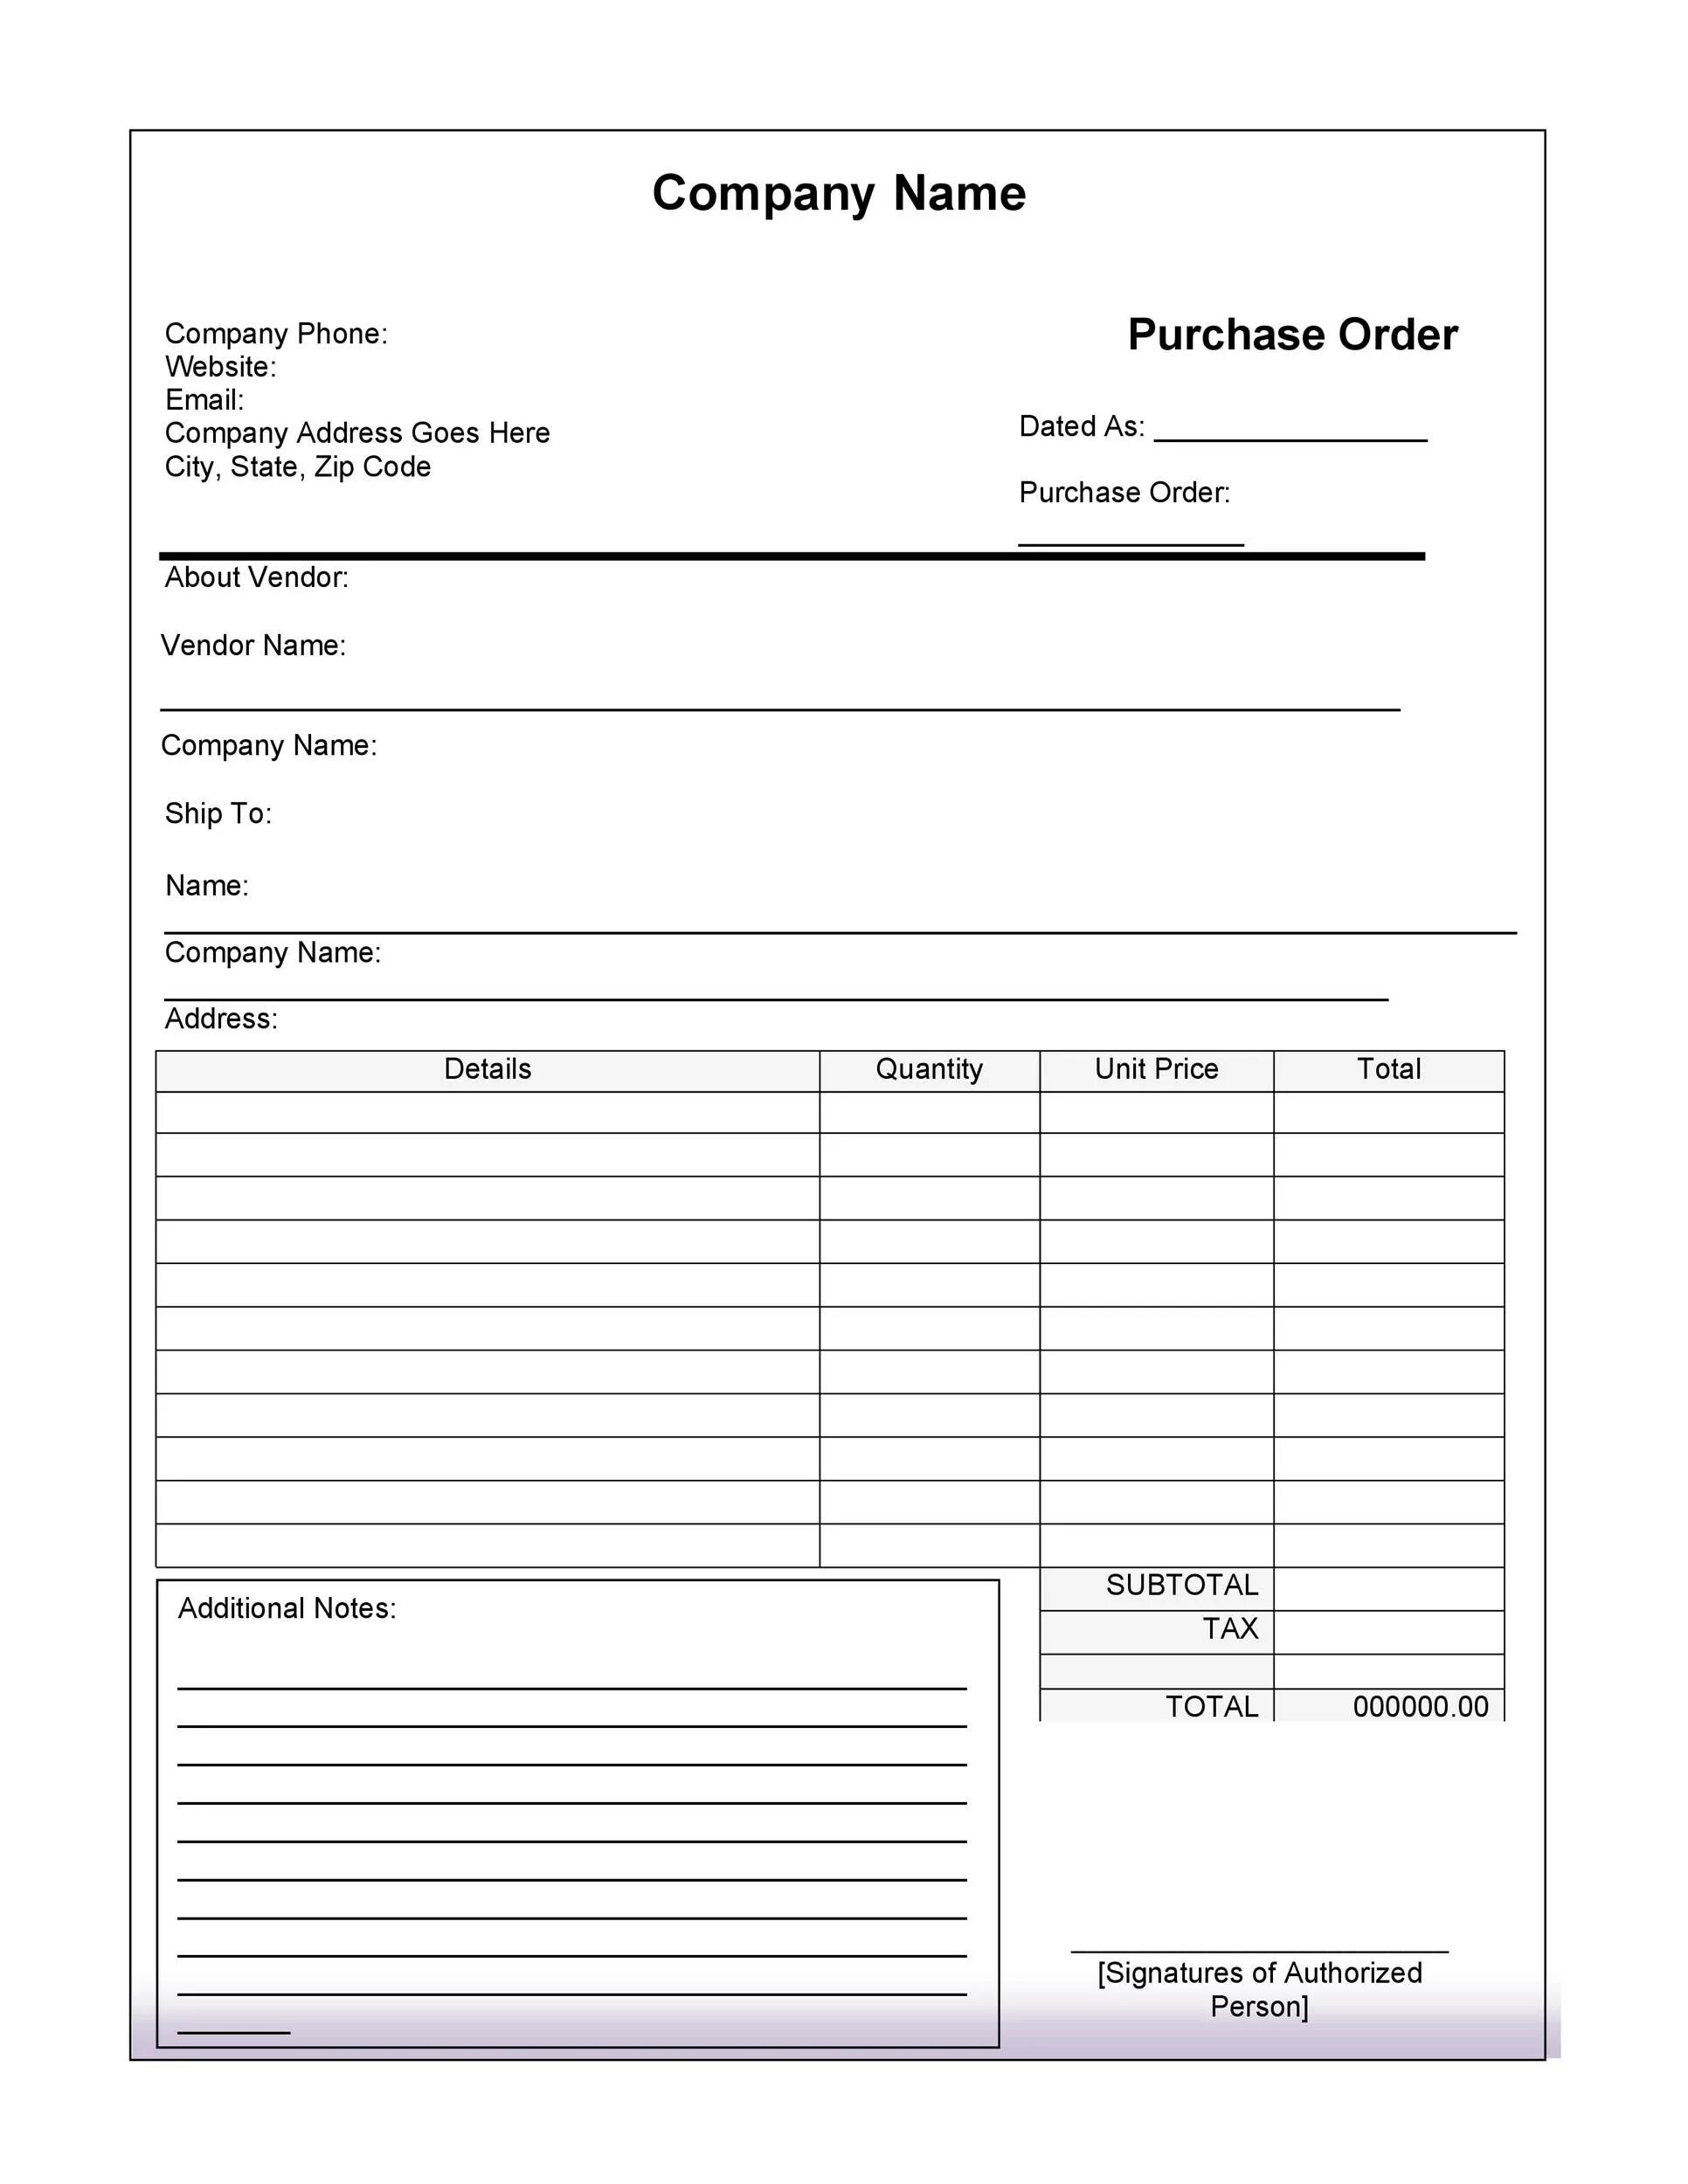 Order pdf. Purchase order form образец. Purchase order бланк. Purchase order excel. Purchase order форма документа excel.